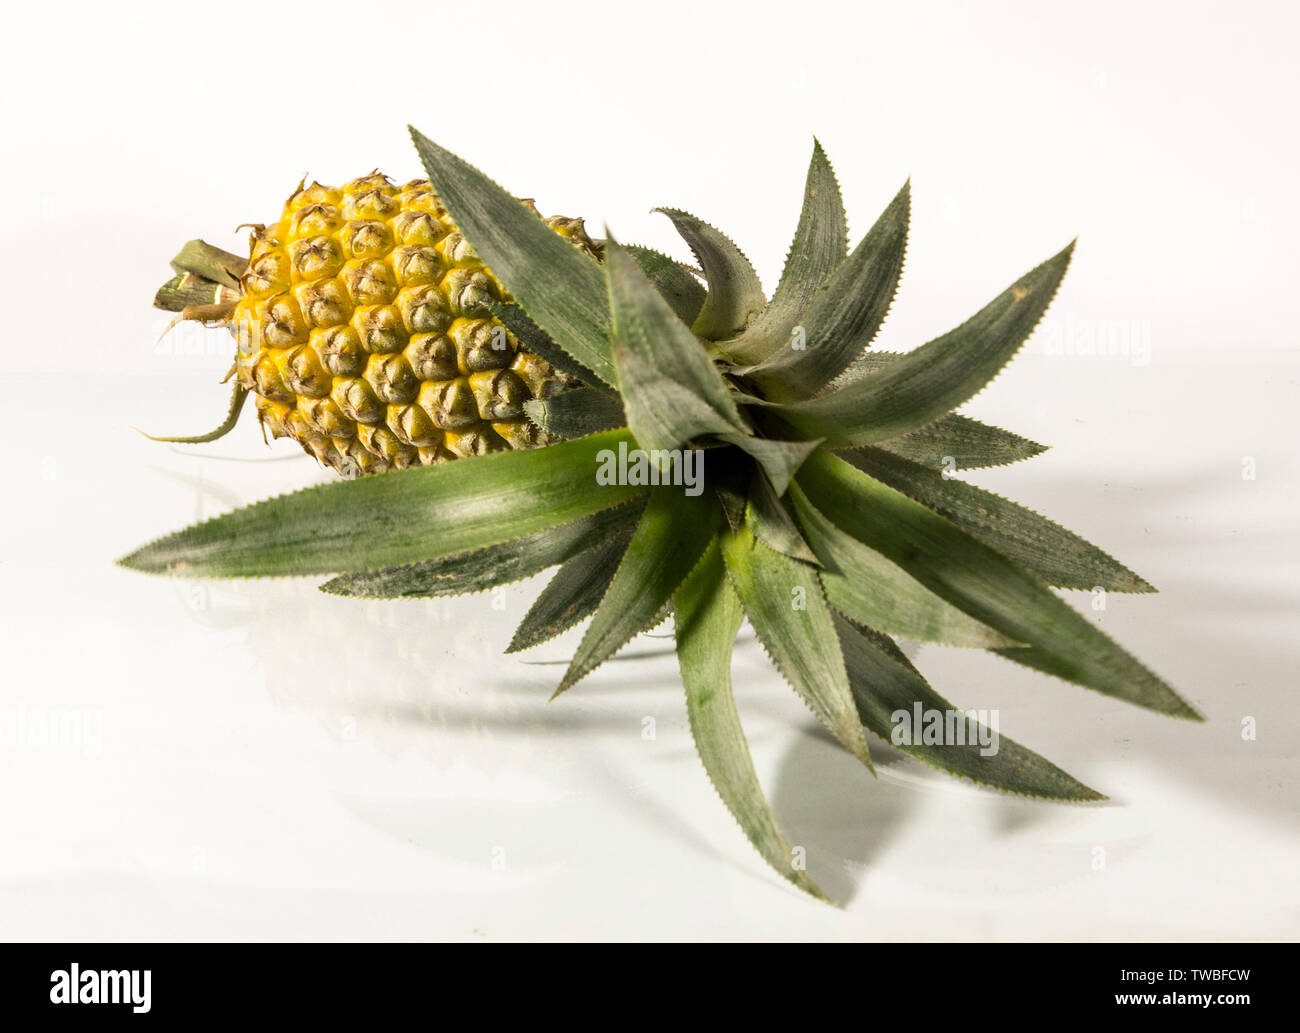 'Fruits of Bangladesh' on Pinterest. See more ideas ... Roselle (plant) - Wikipedia, the free encyclopedia Cash Crop, Antonio Garcia, .... pineapples Stock Photo